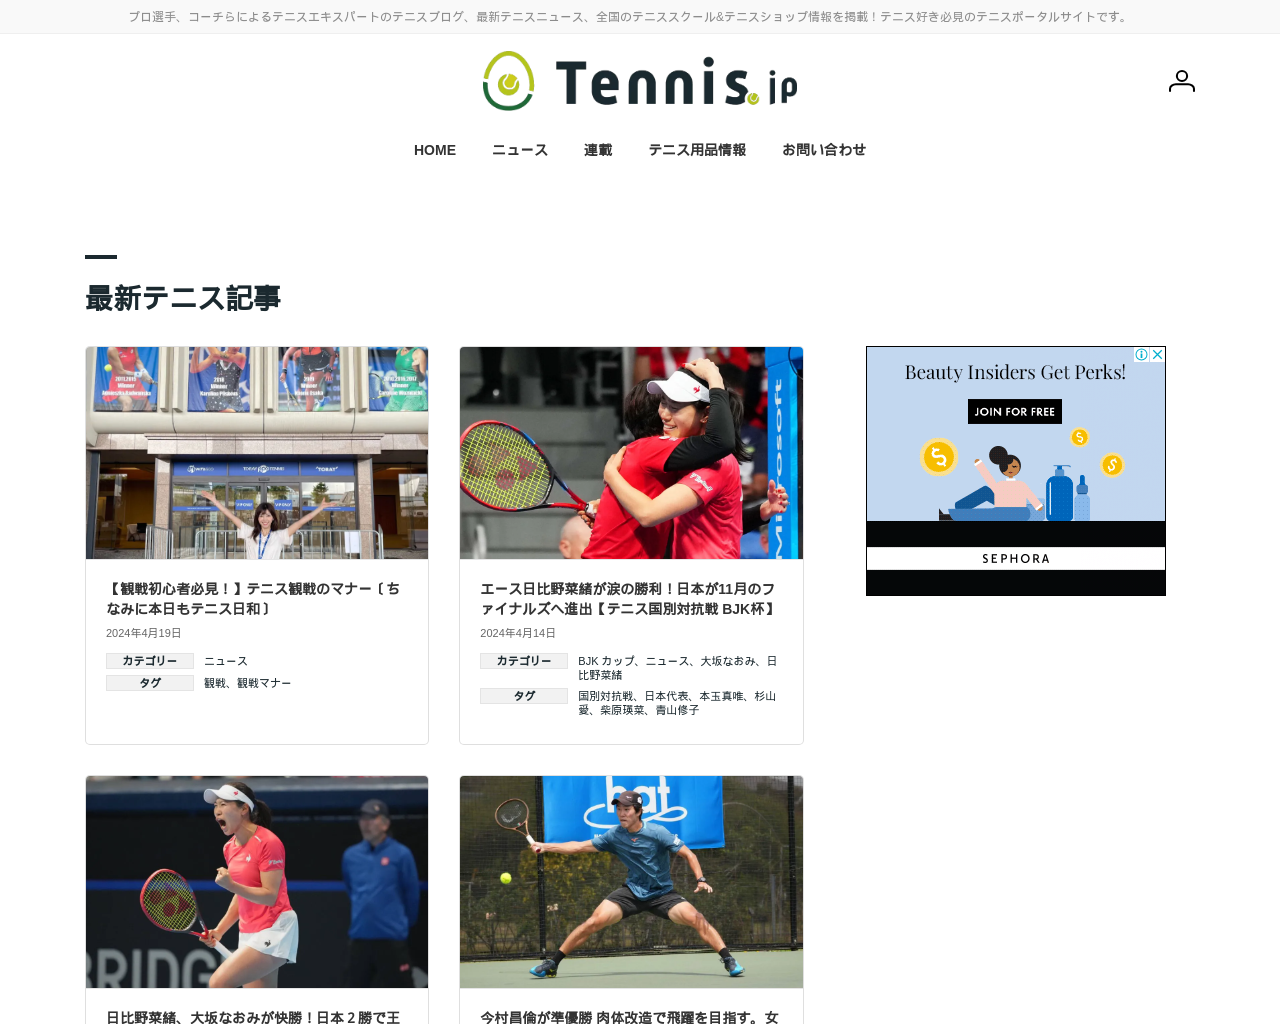 tennis.jp